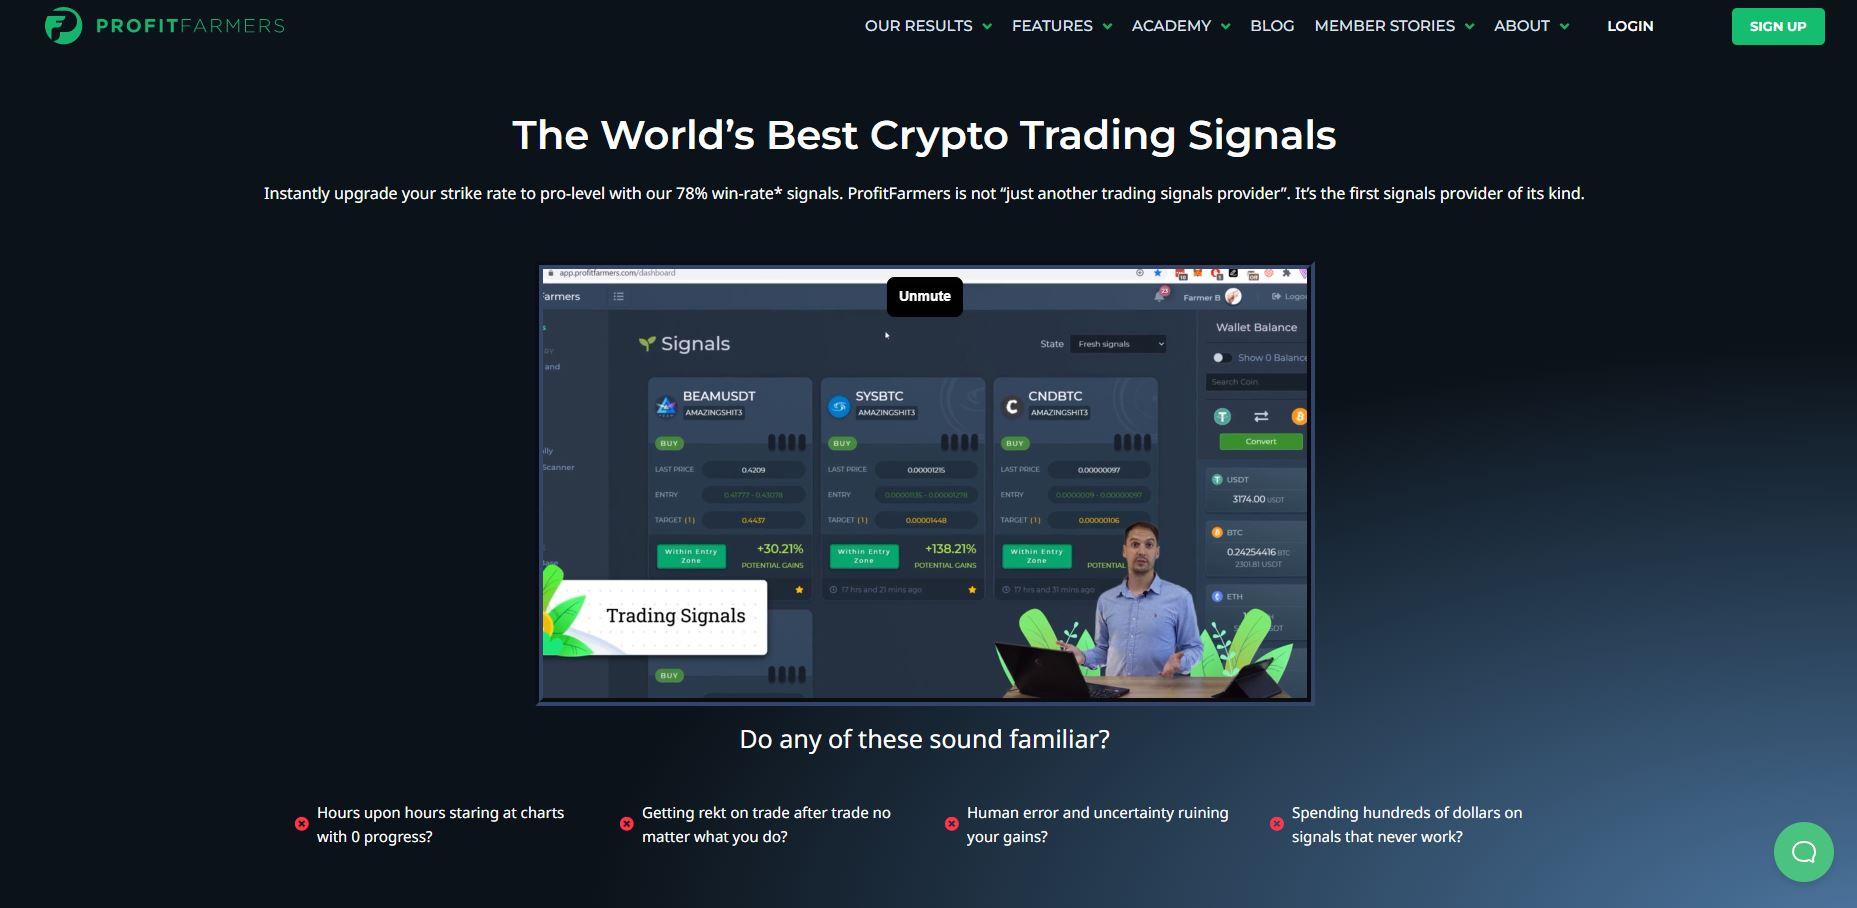 ProfitFarmers crypto trading signals page